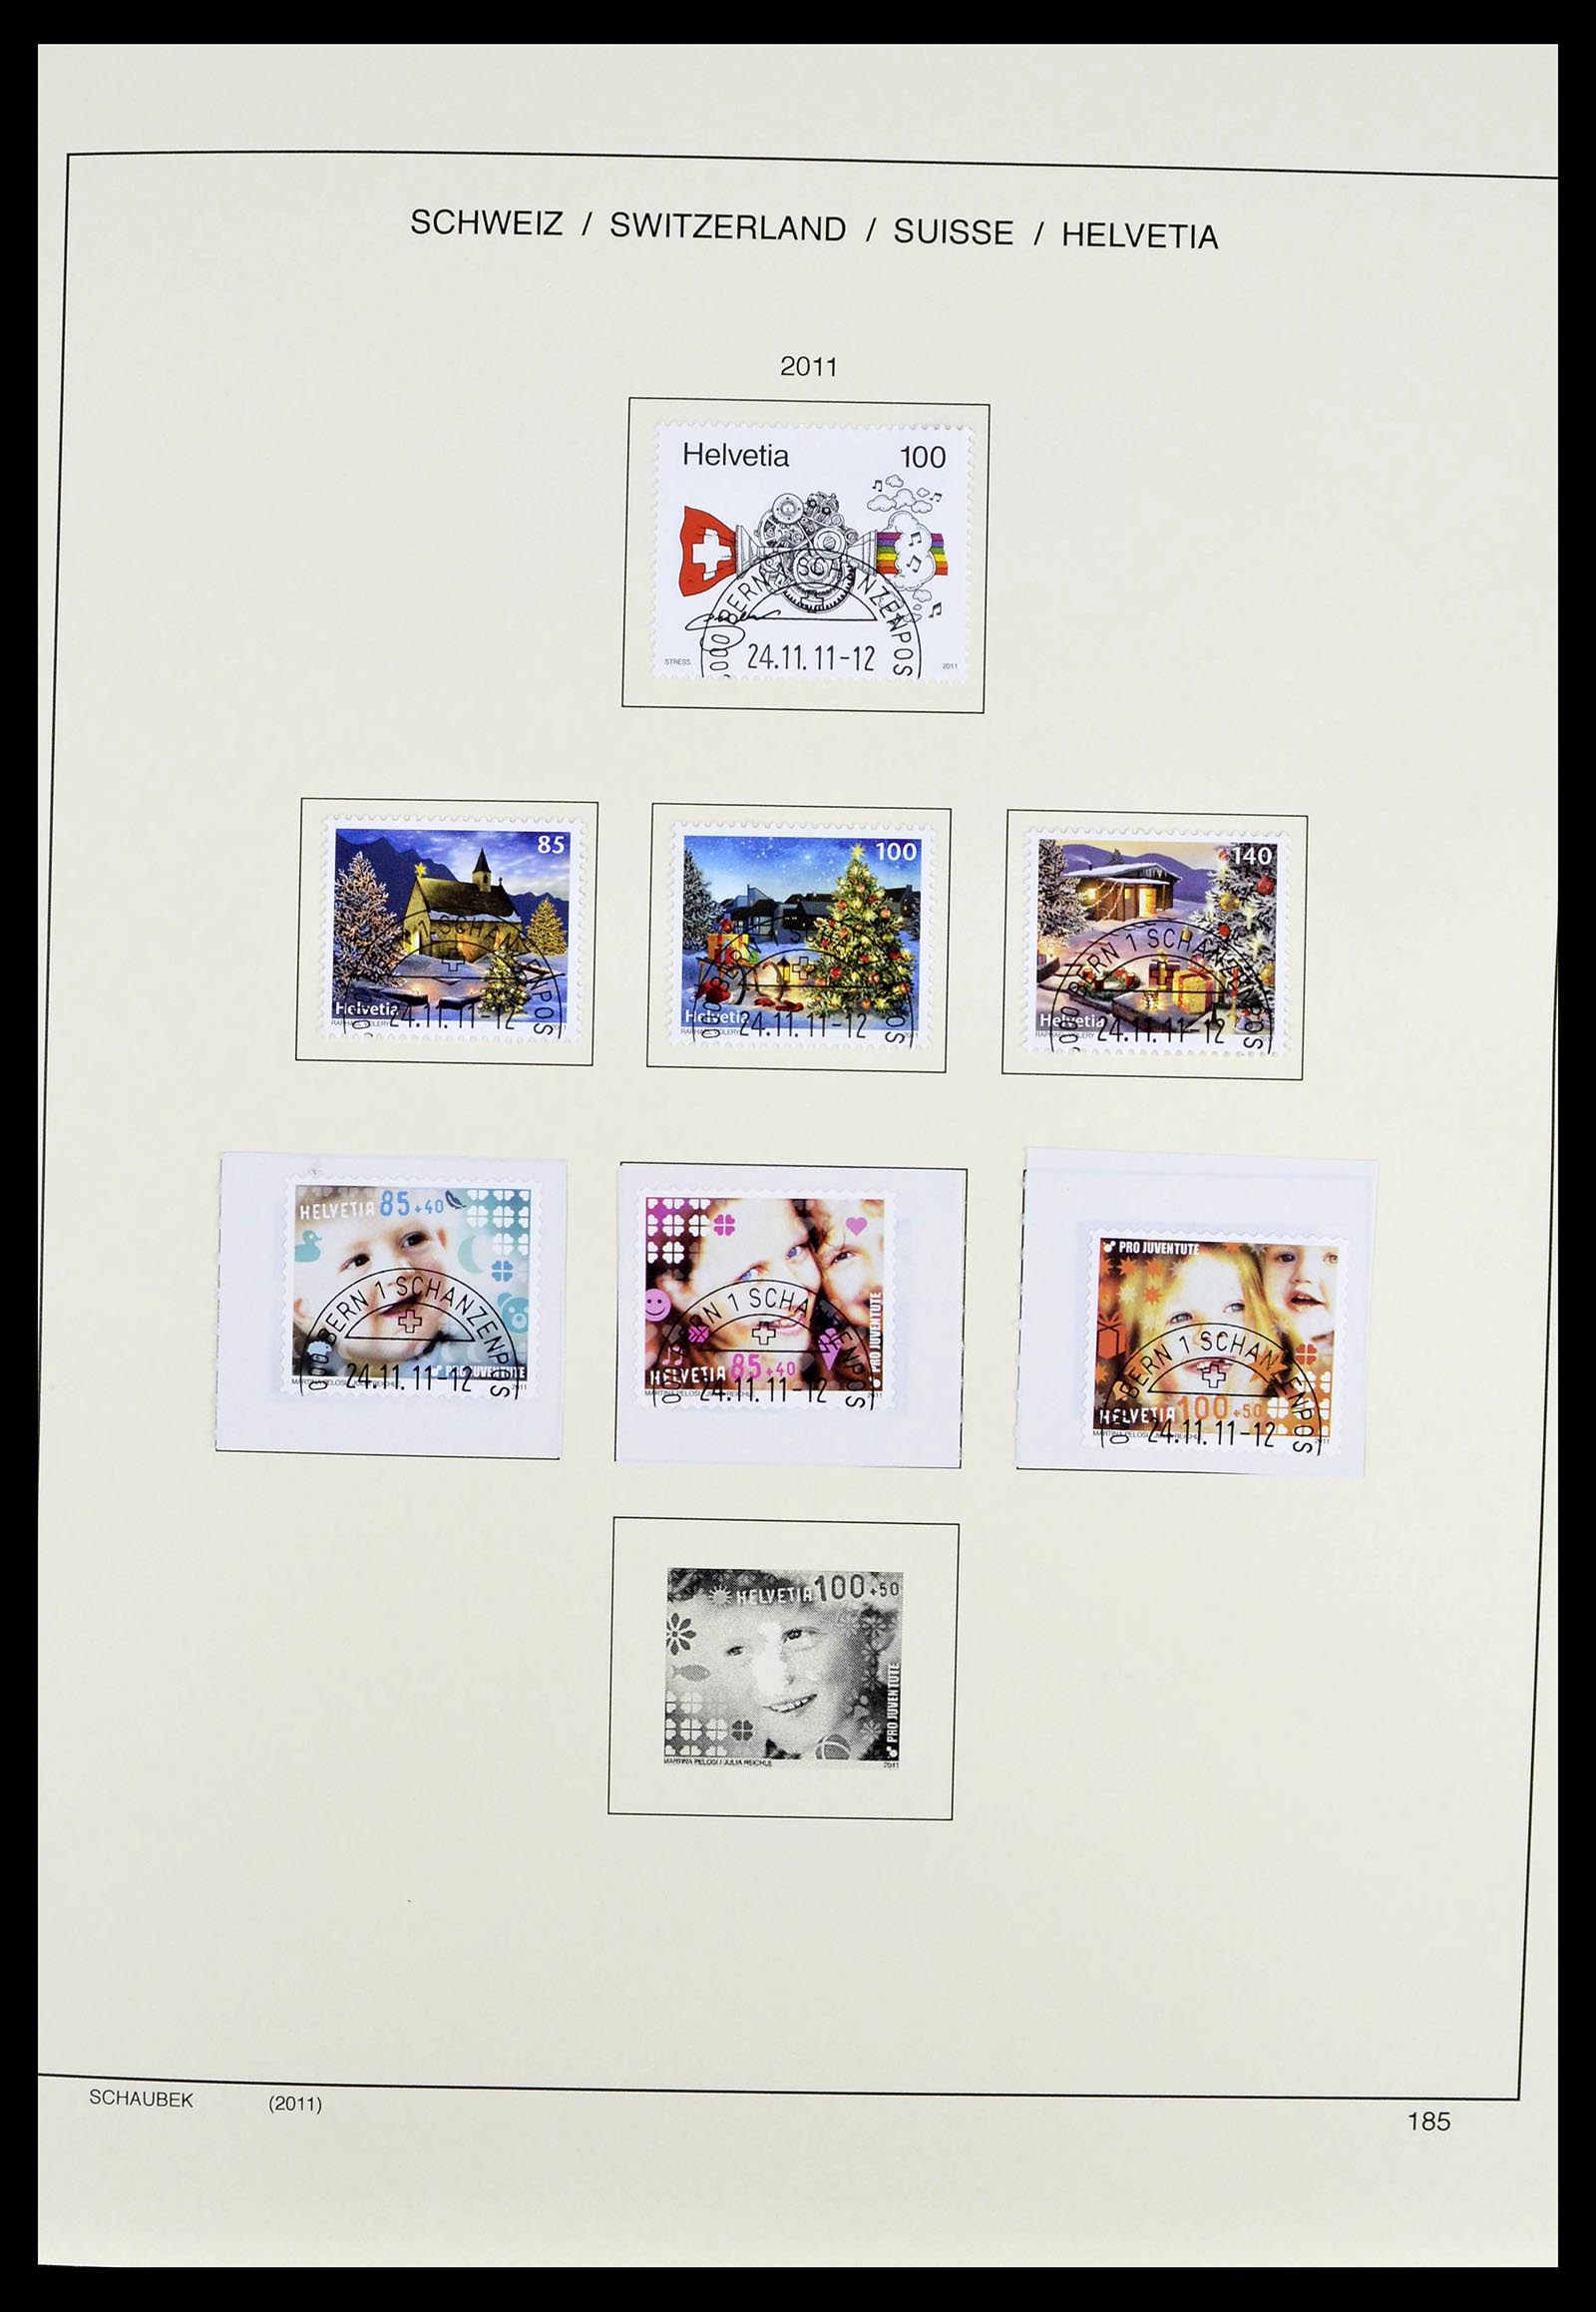 39322 0125 - Stamp collection 39322 Switzerland 1980-2011.